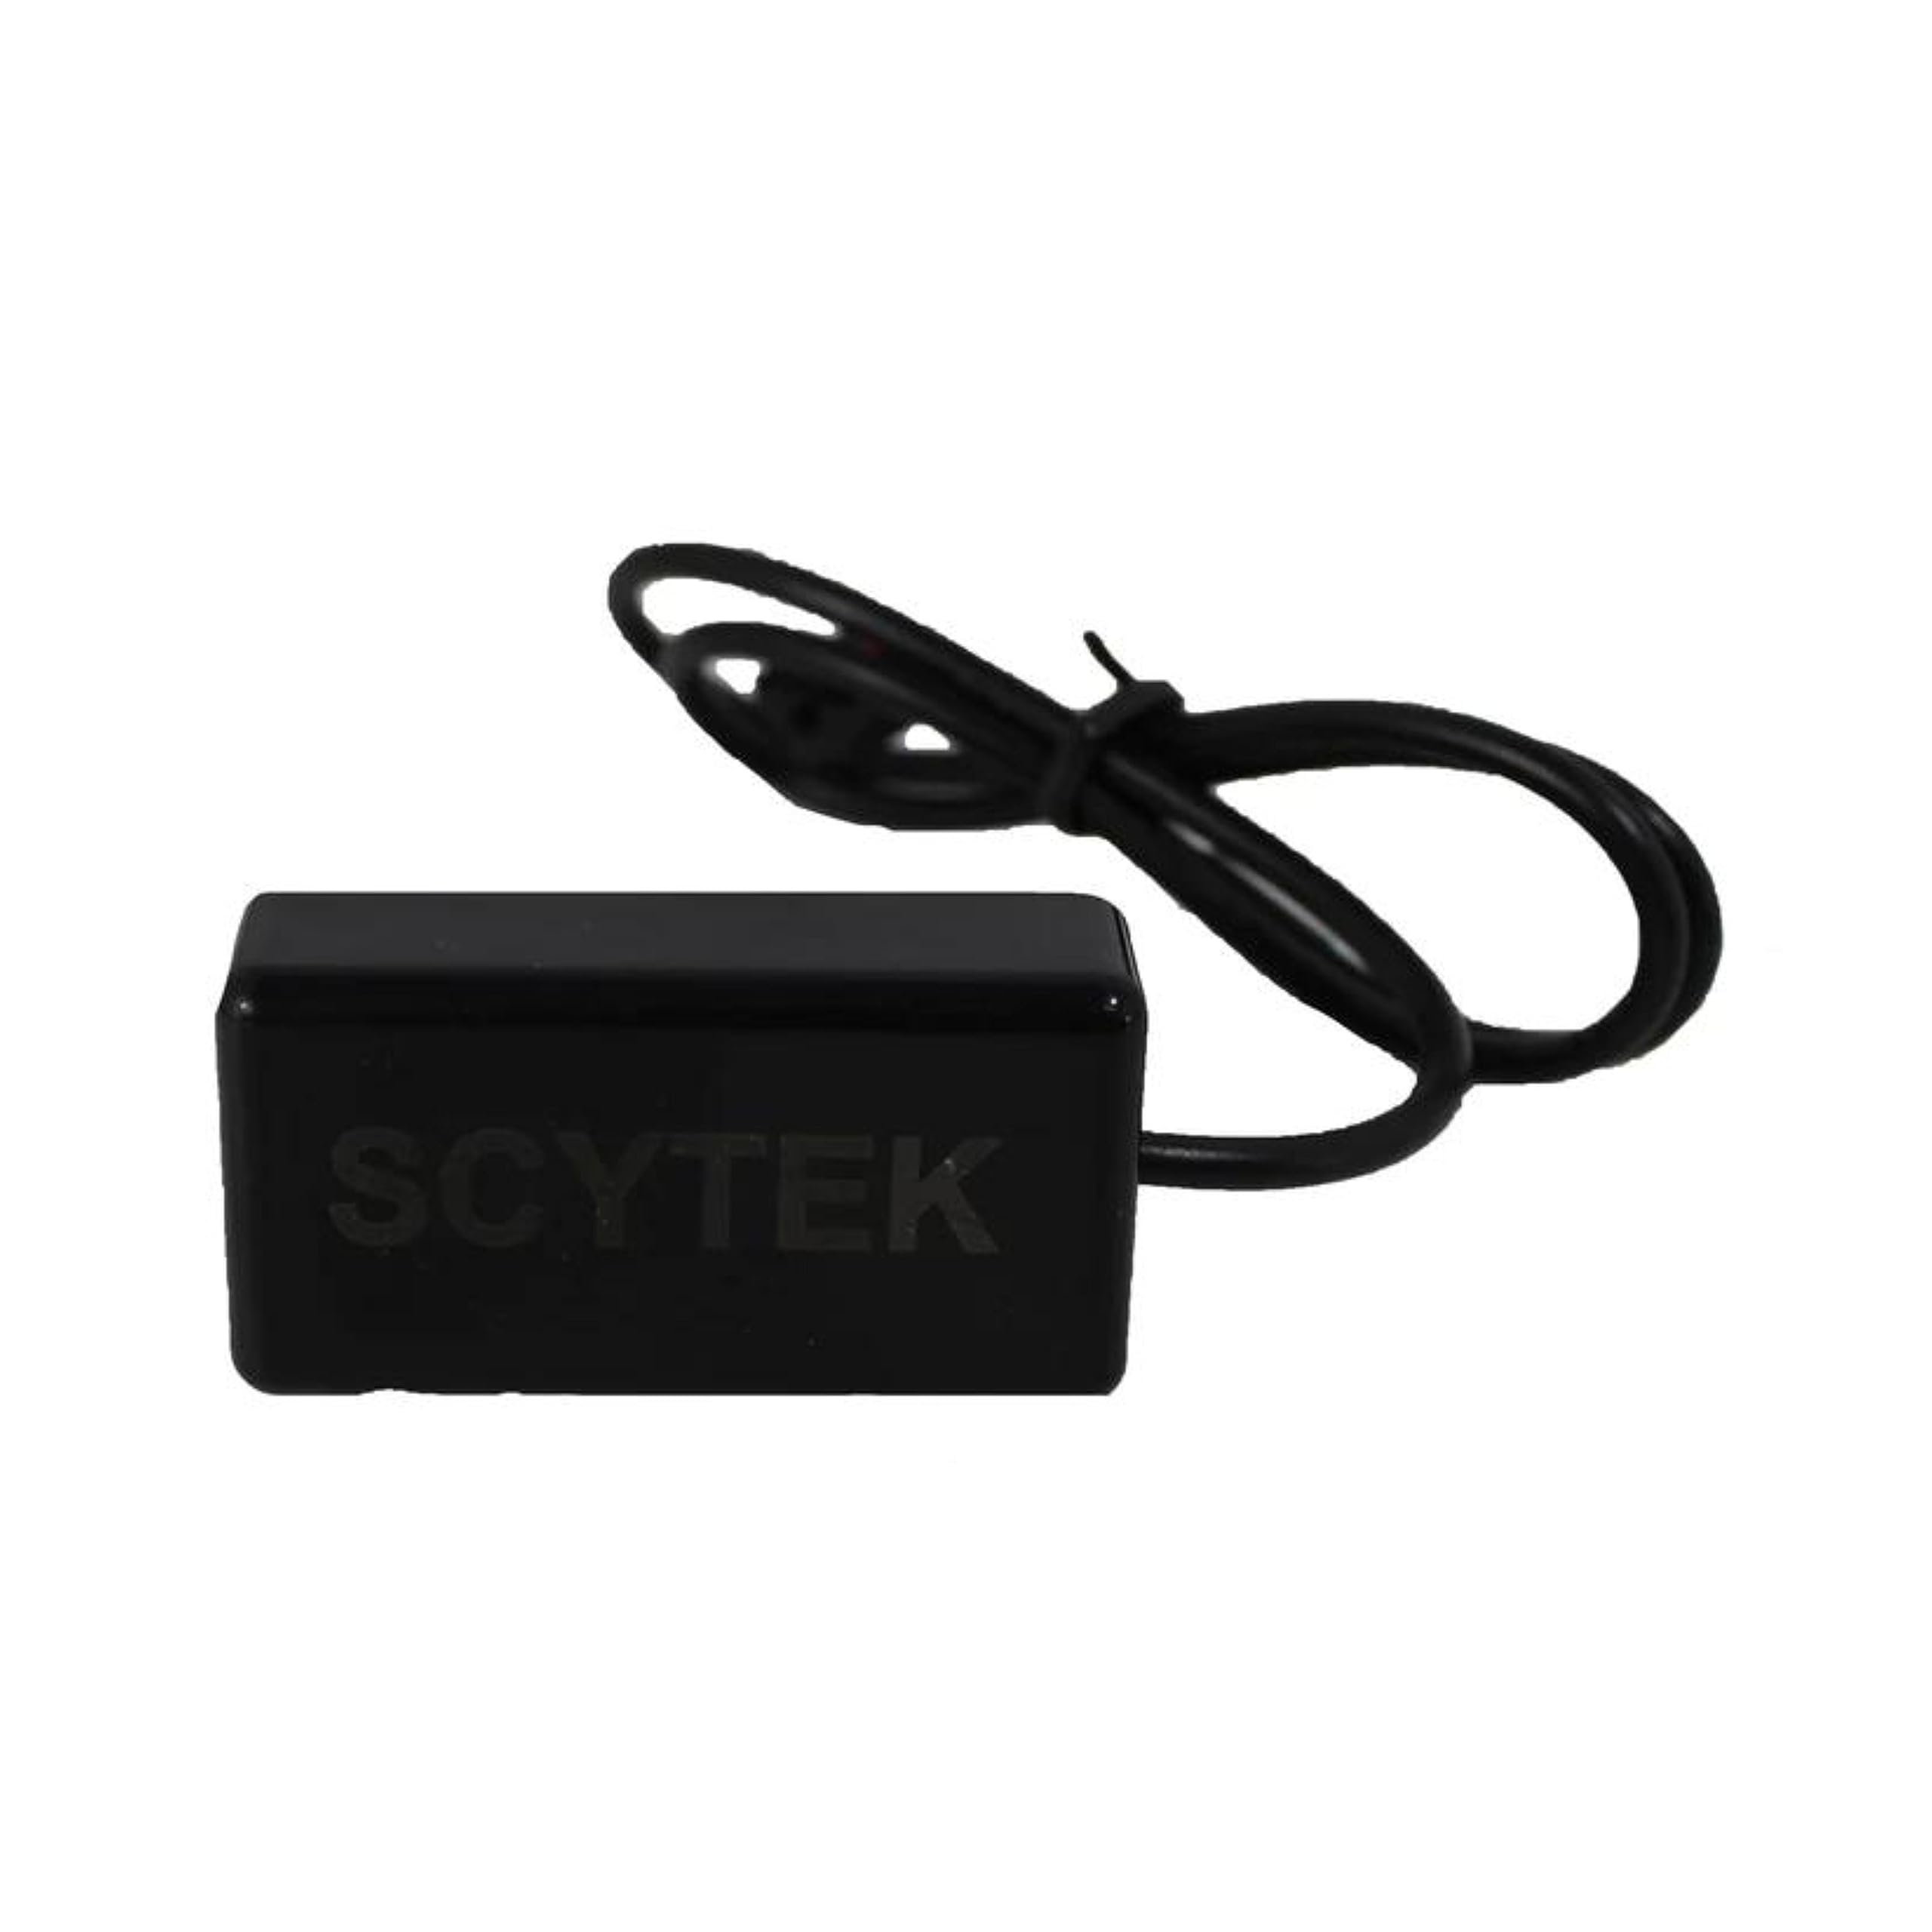 Plug and Play SCYTEK Mobilink G3 GPS Tracking + 2 Way Car Alarm Upgrade Combo